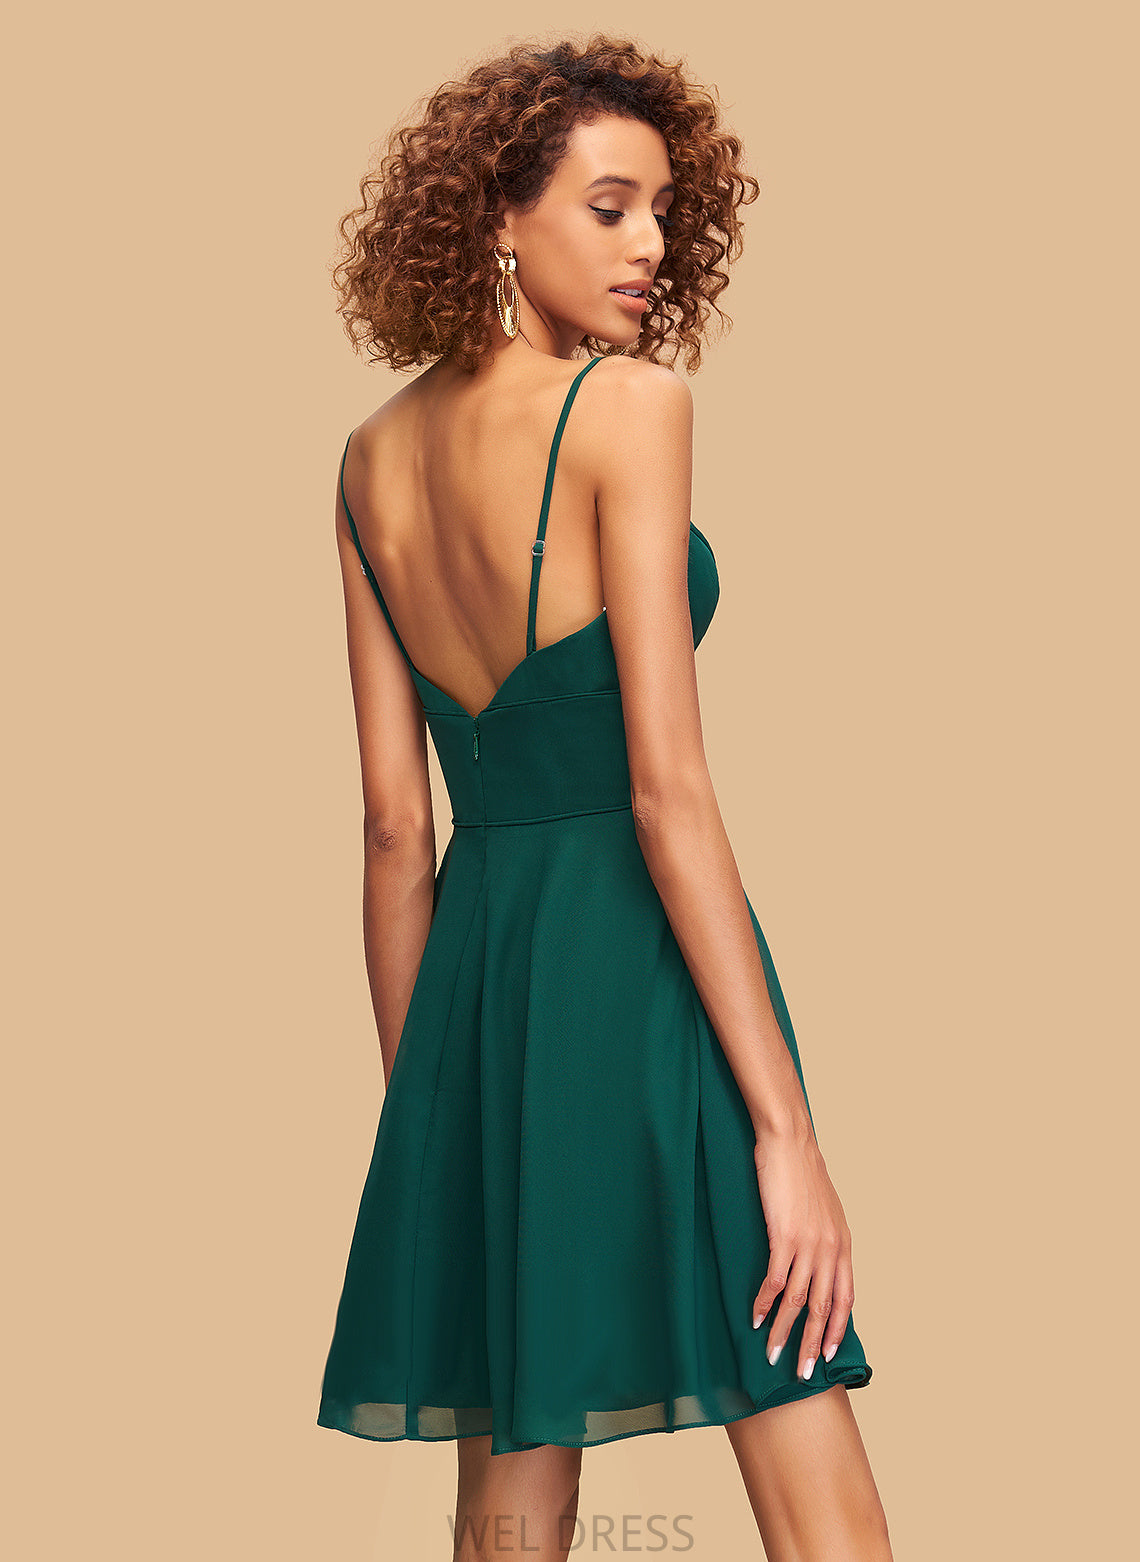 Dress Kyleigh Chiffon Homecoming Homecoming Dresses V-neck Short/Mini A-Line